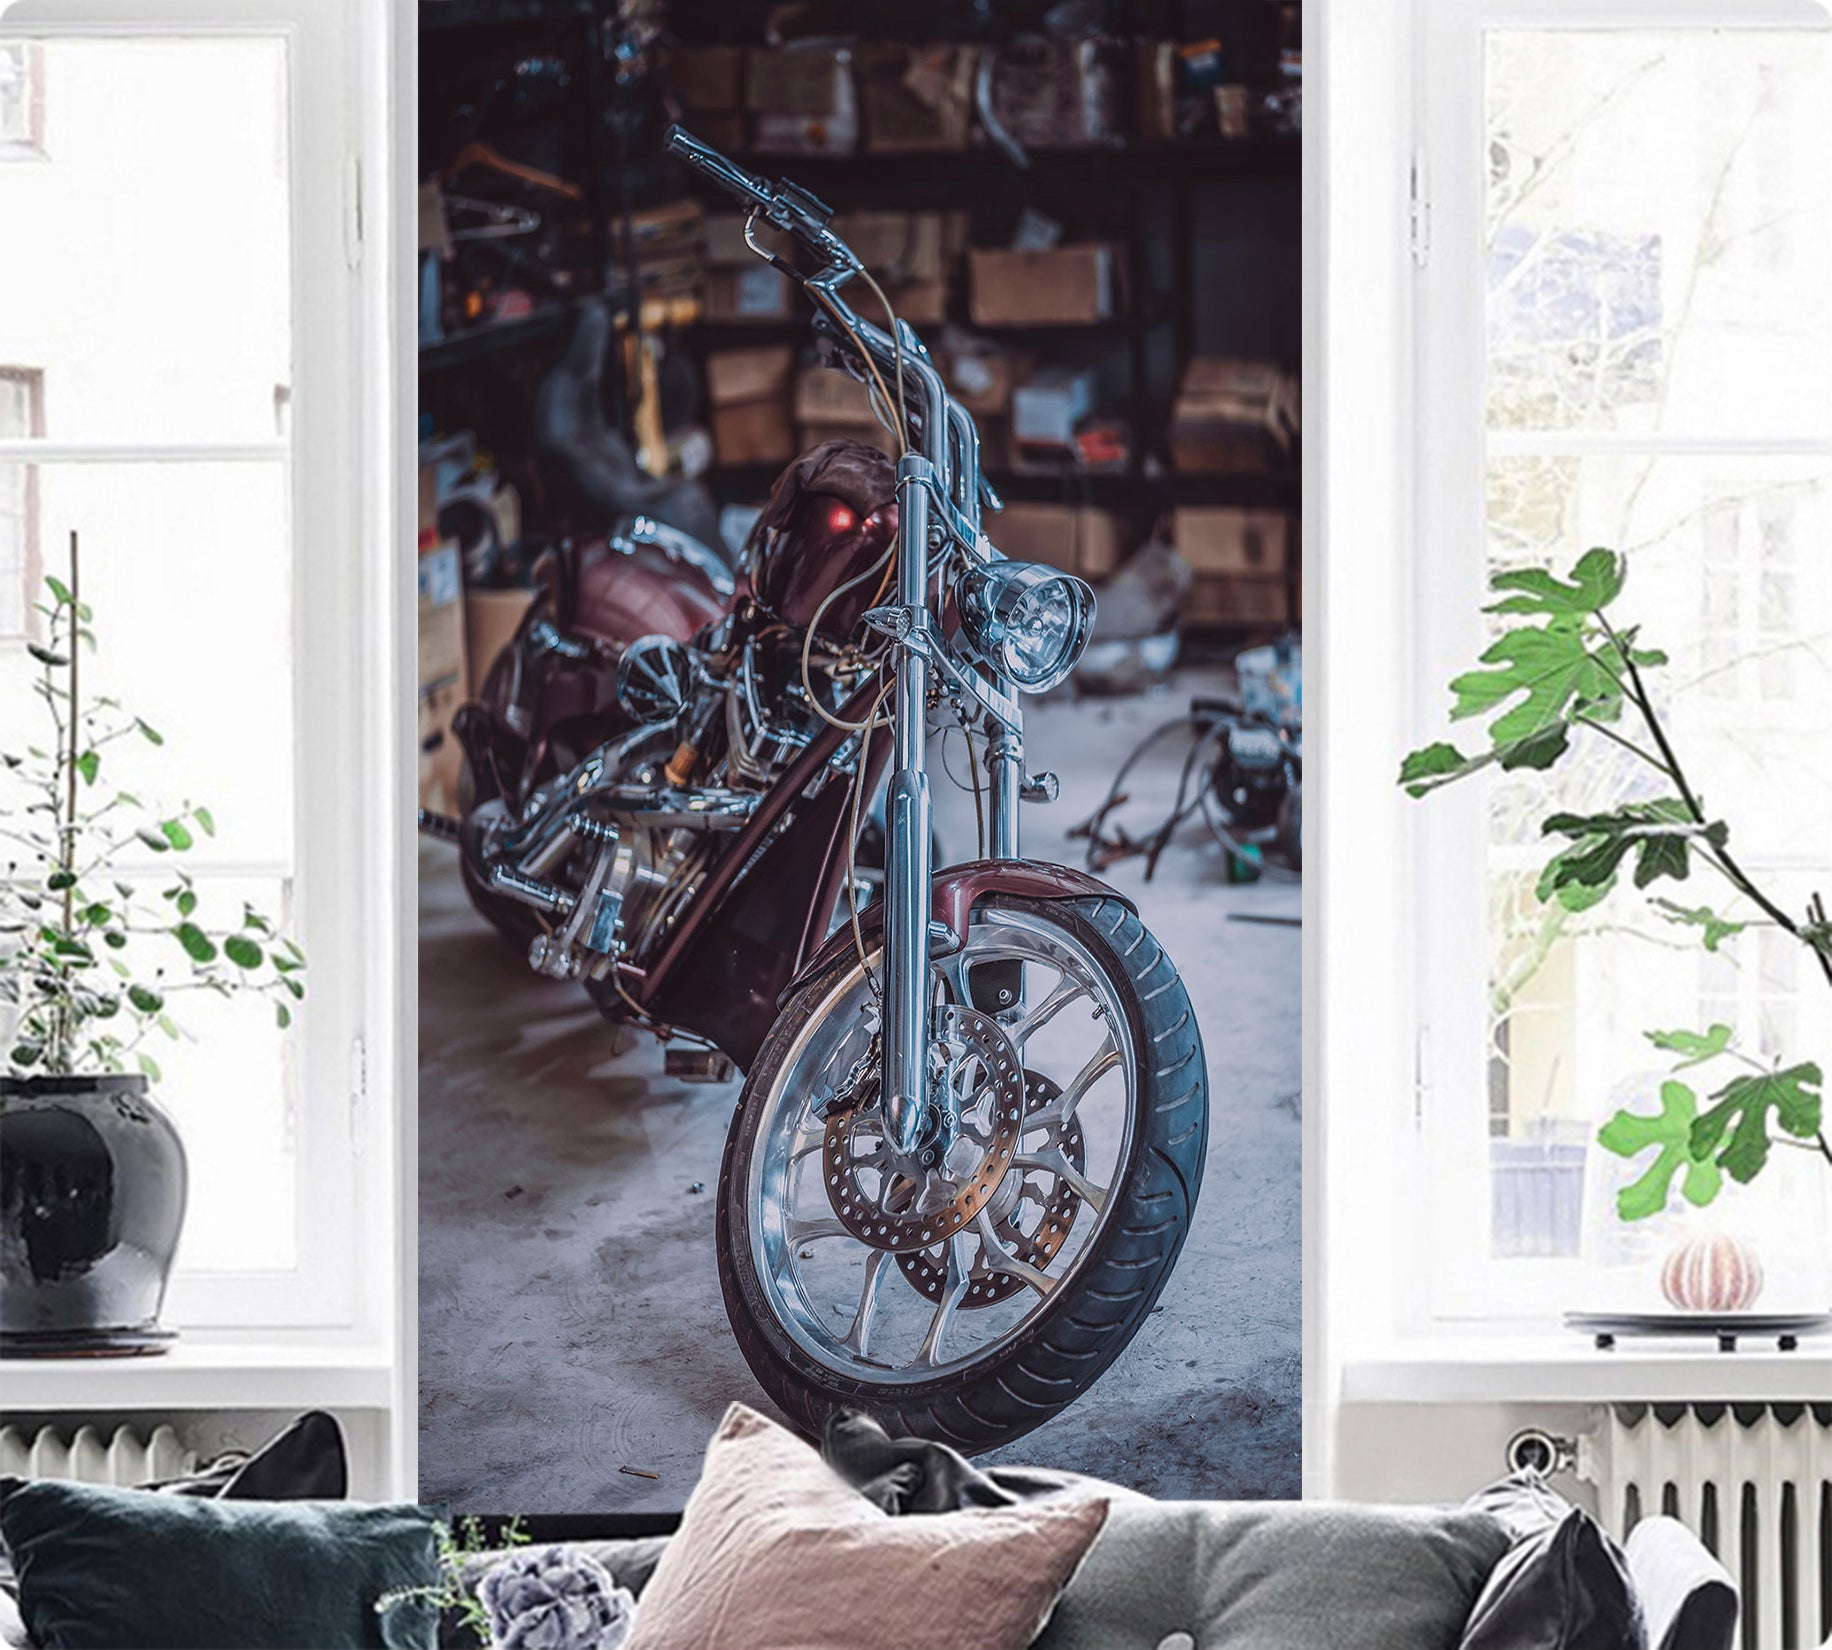 3D Luxury Motorcycle 422 Vehicle Wall Murals